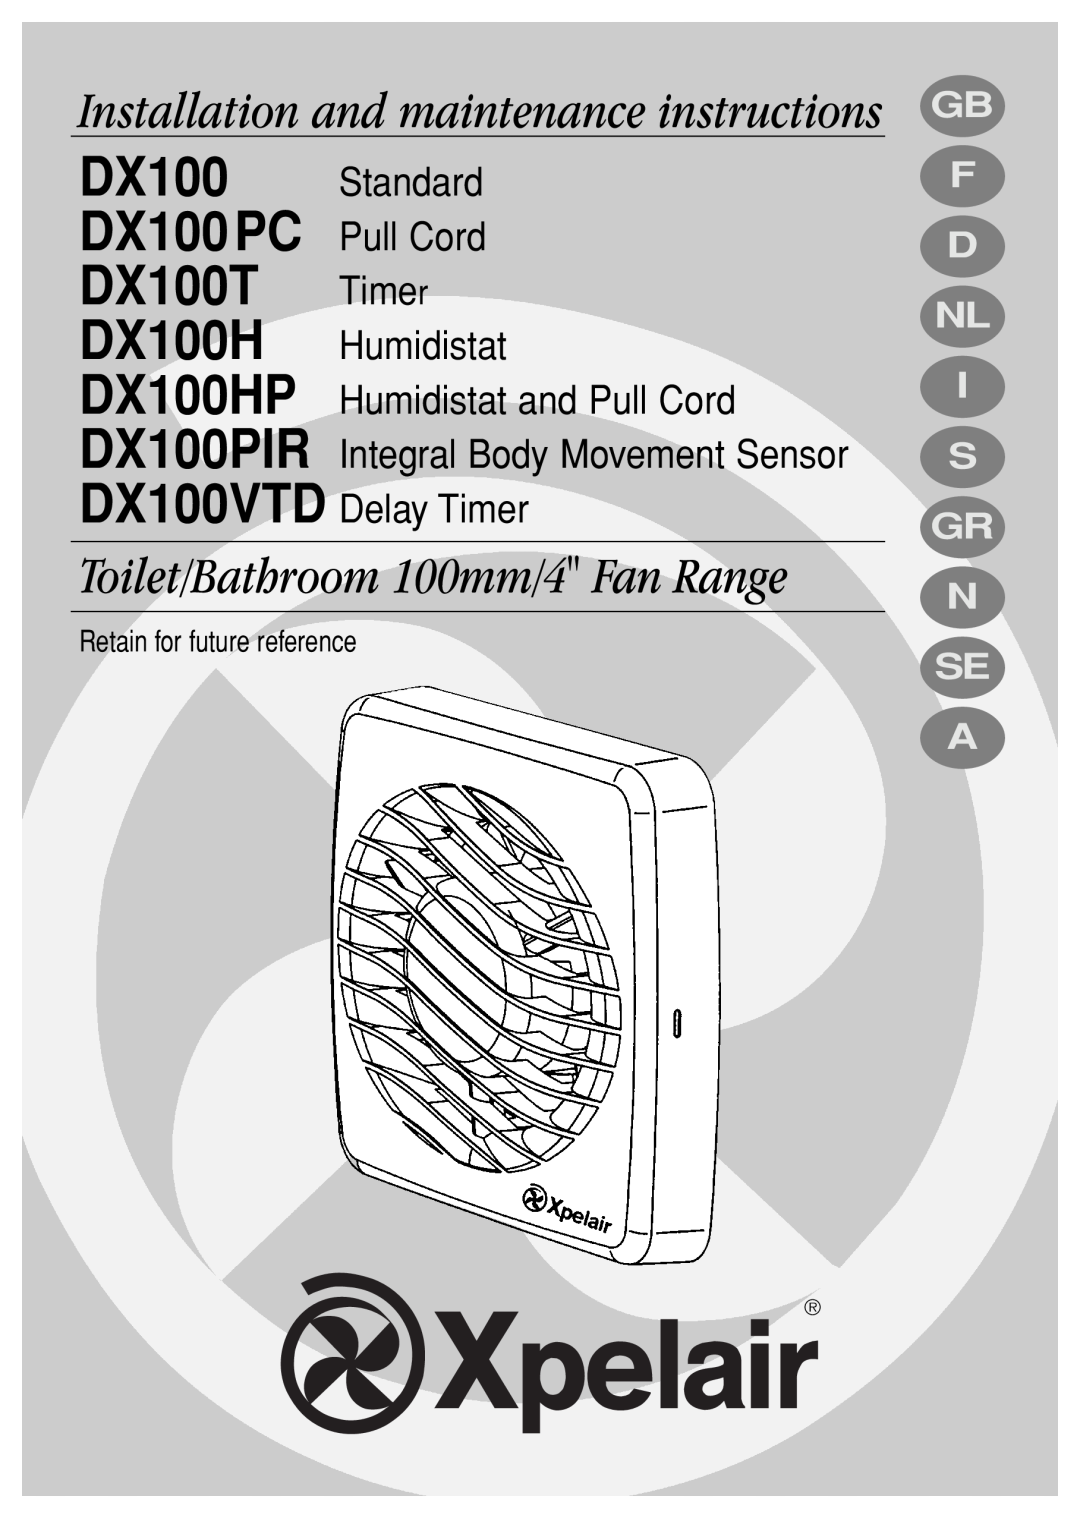 Xpelair manual Gb F D Nl I S Gr N Se A, Retain for future reference, DX100T Timer, Toilet/Bathroom 100mm/4 Fan Range 